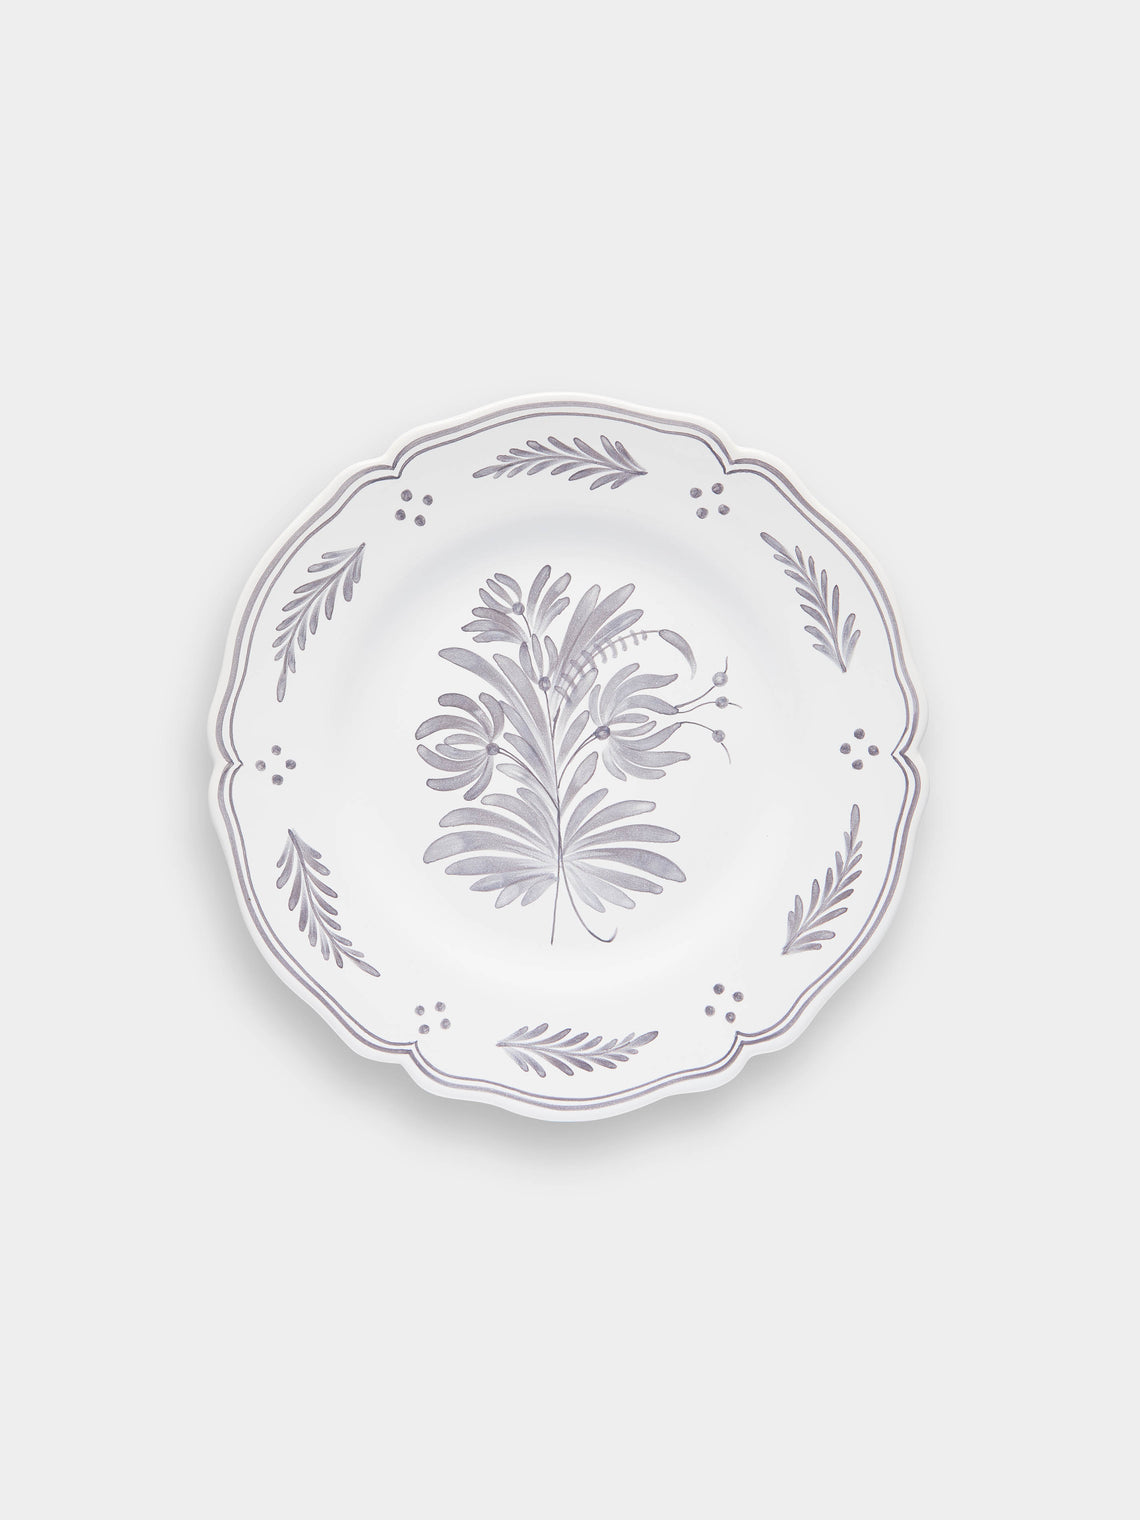 Bourg Joly Malicorne - Antique Fleurs Hand-Painted Ceramic Side Plates (Set of 4) -  - ABASK - 